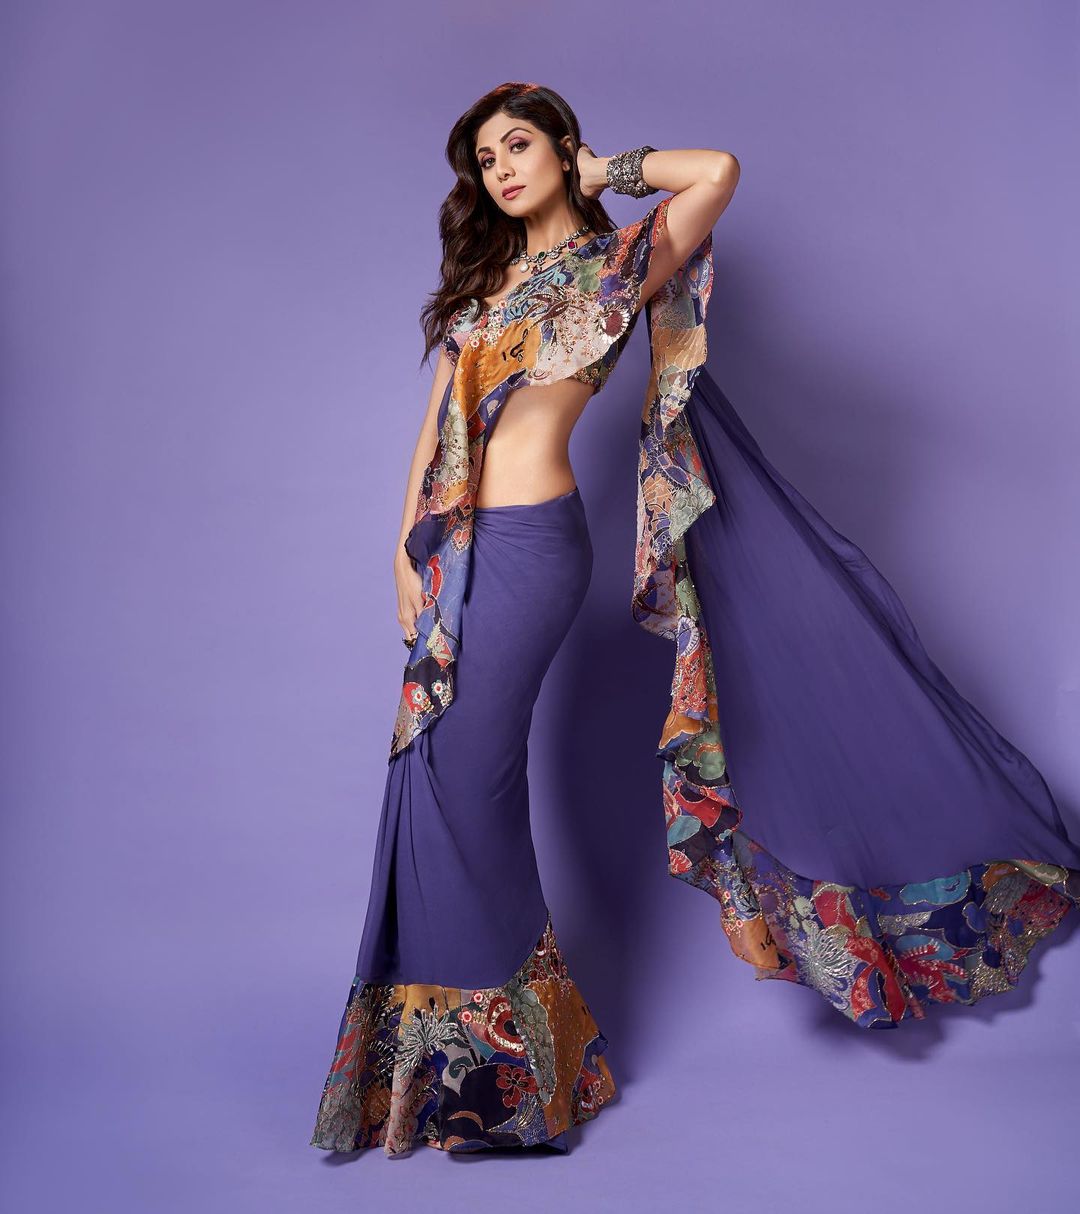 Shilpa Shetty Kundra flaunts her figure in the purple saree